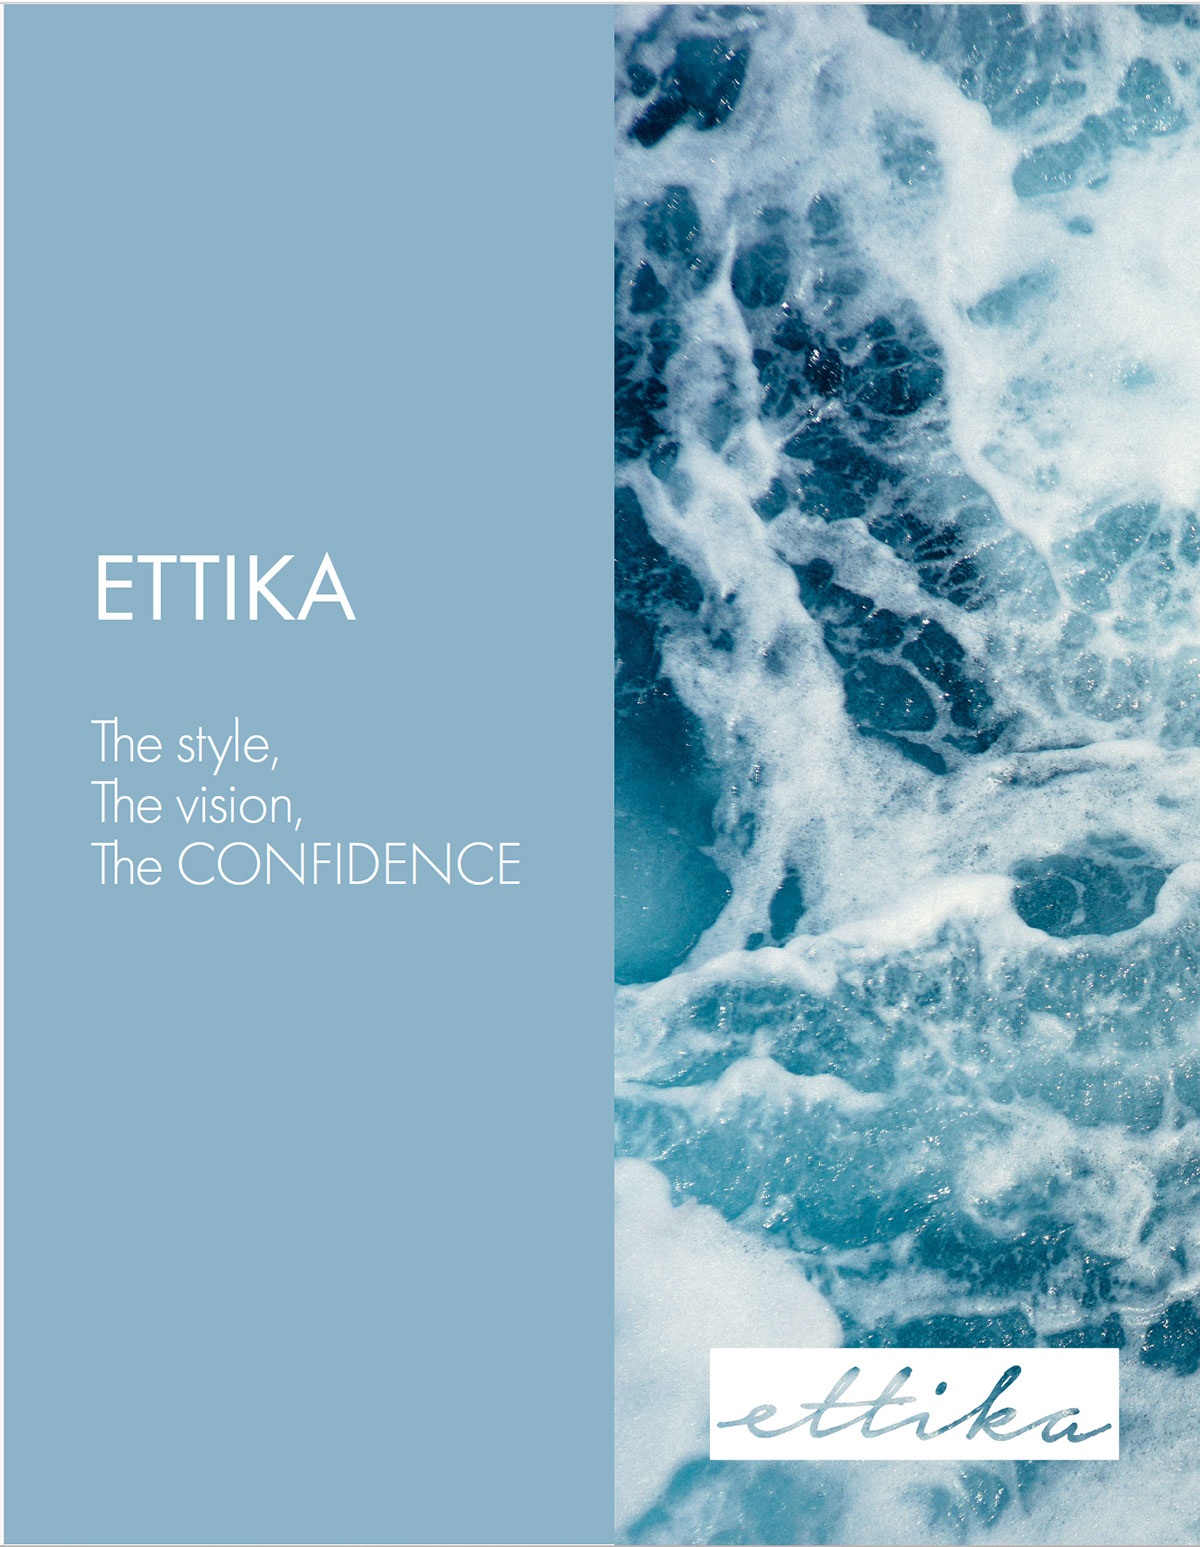 Ettika Interview Project rendition image